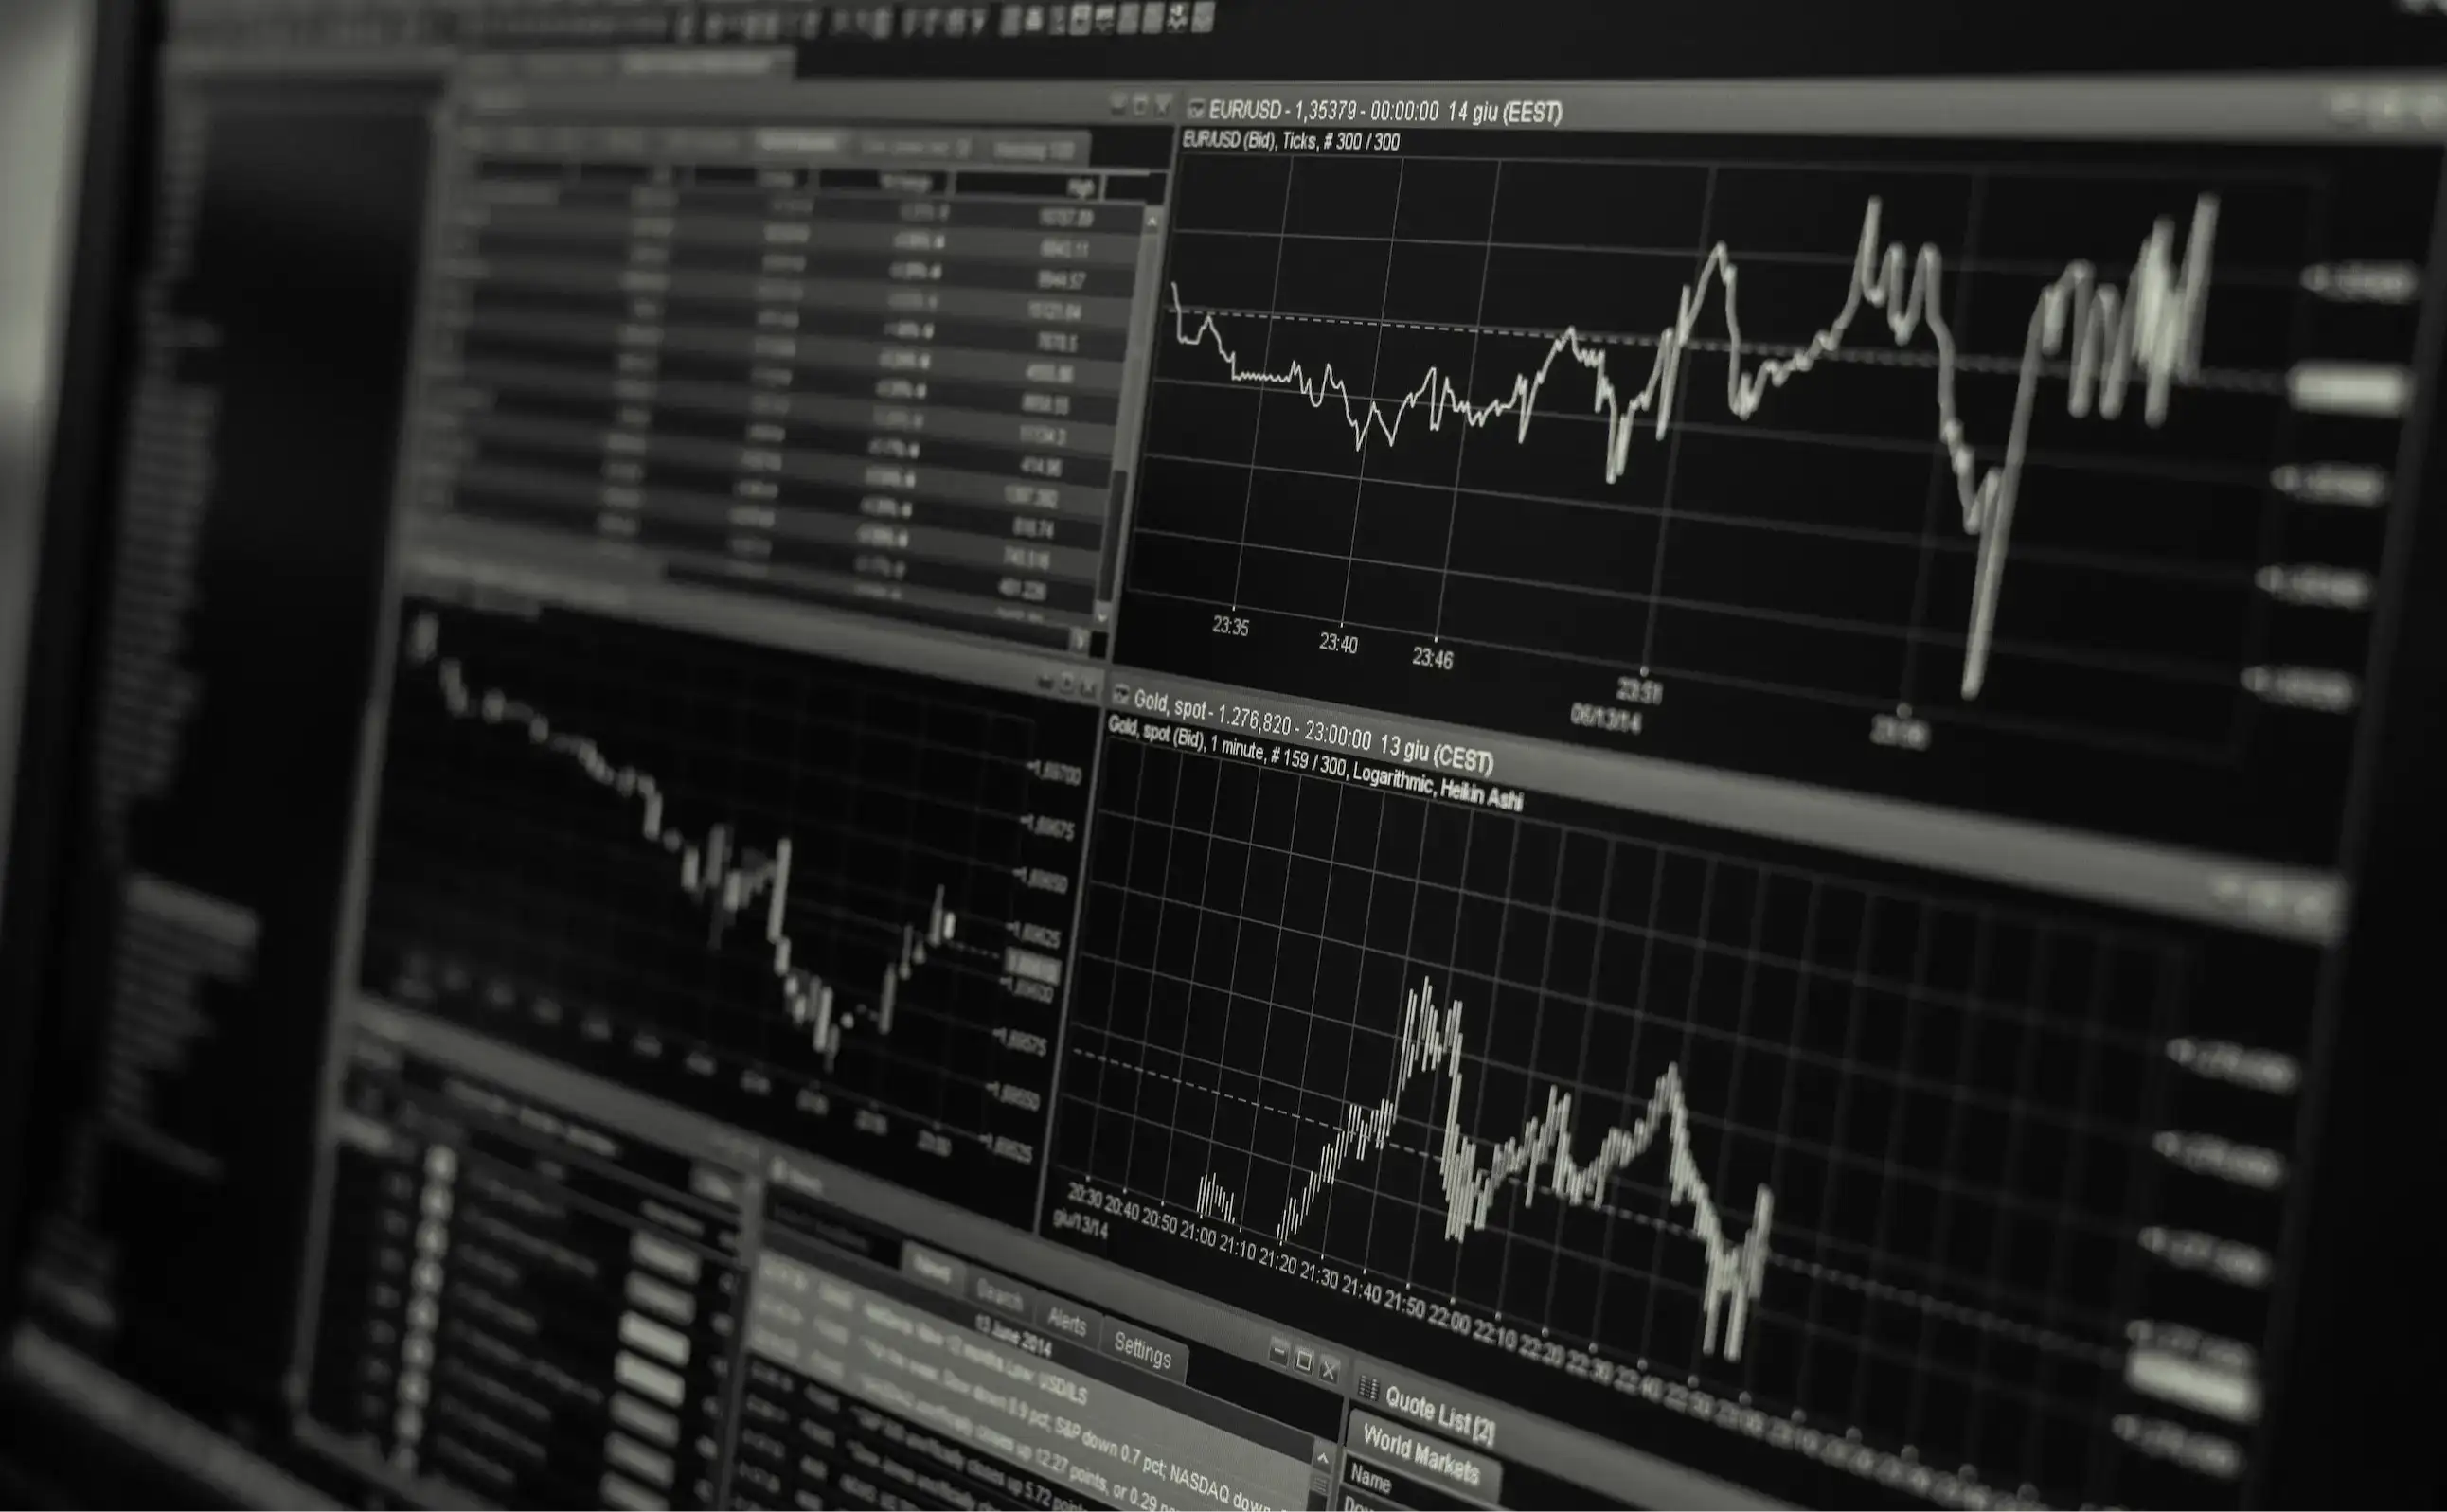 A Stock market graphs on a computer screen.